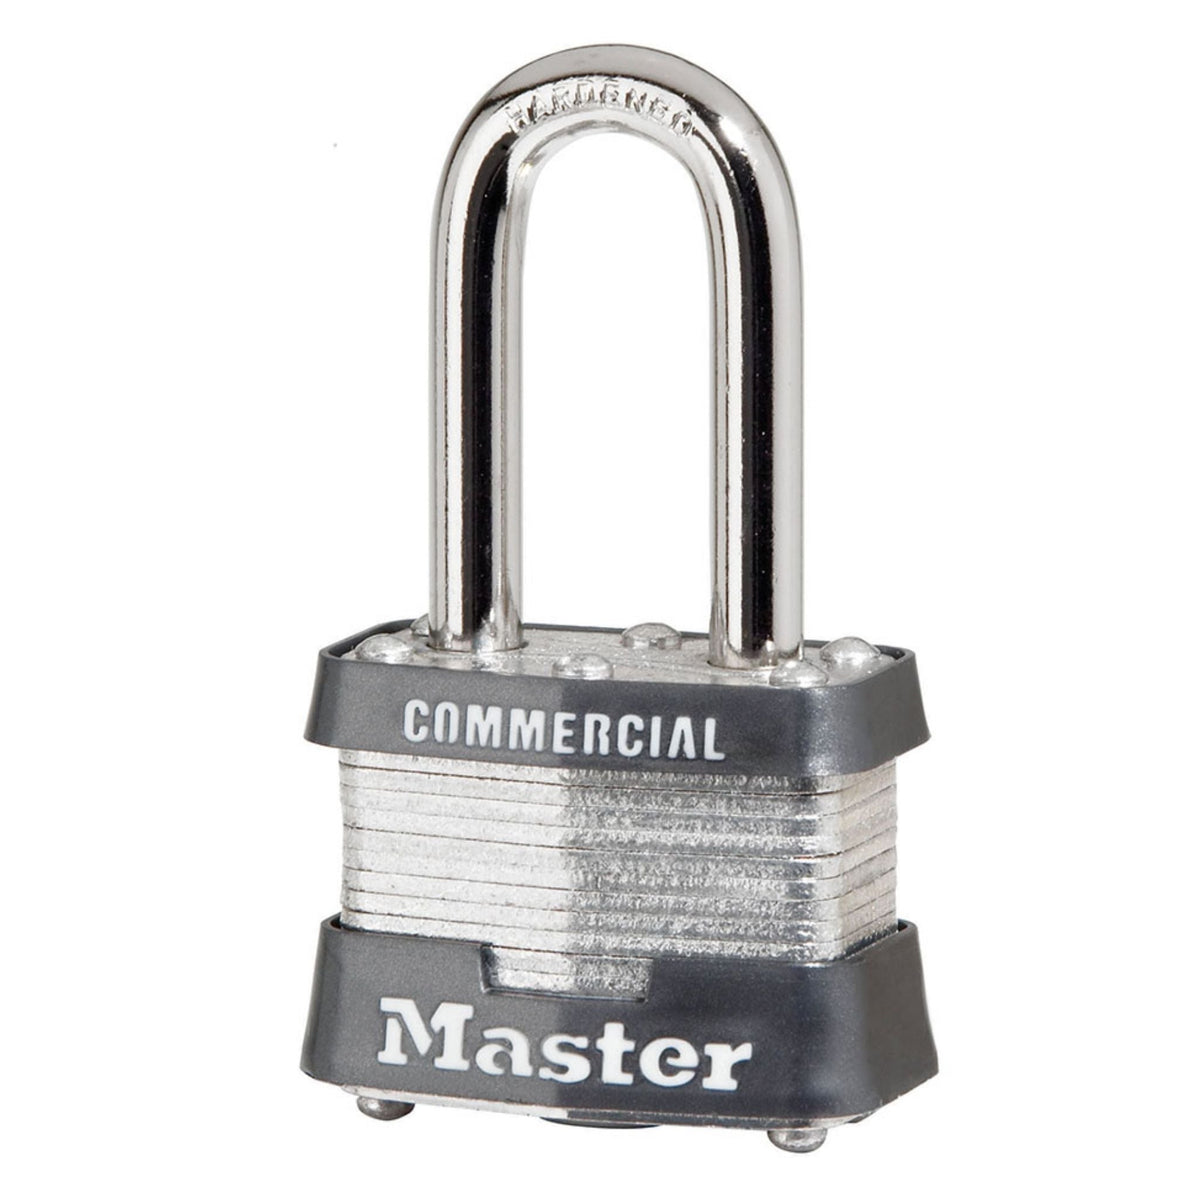 Master Lock 3KALF 3975 Laminated Steel Locks Keyed Alike to Match Key Number KA3975 with 1.5-Inch Shackle - The Lock Source